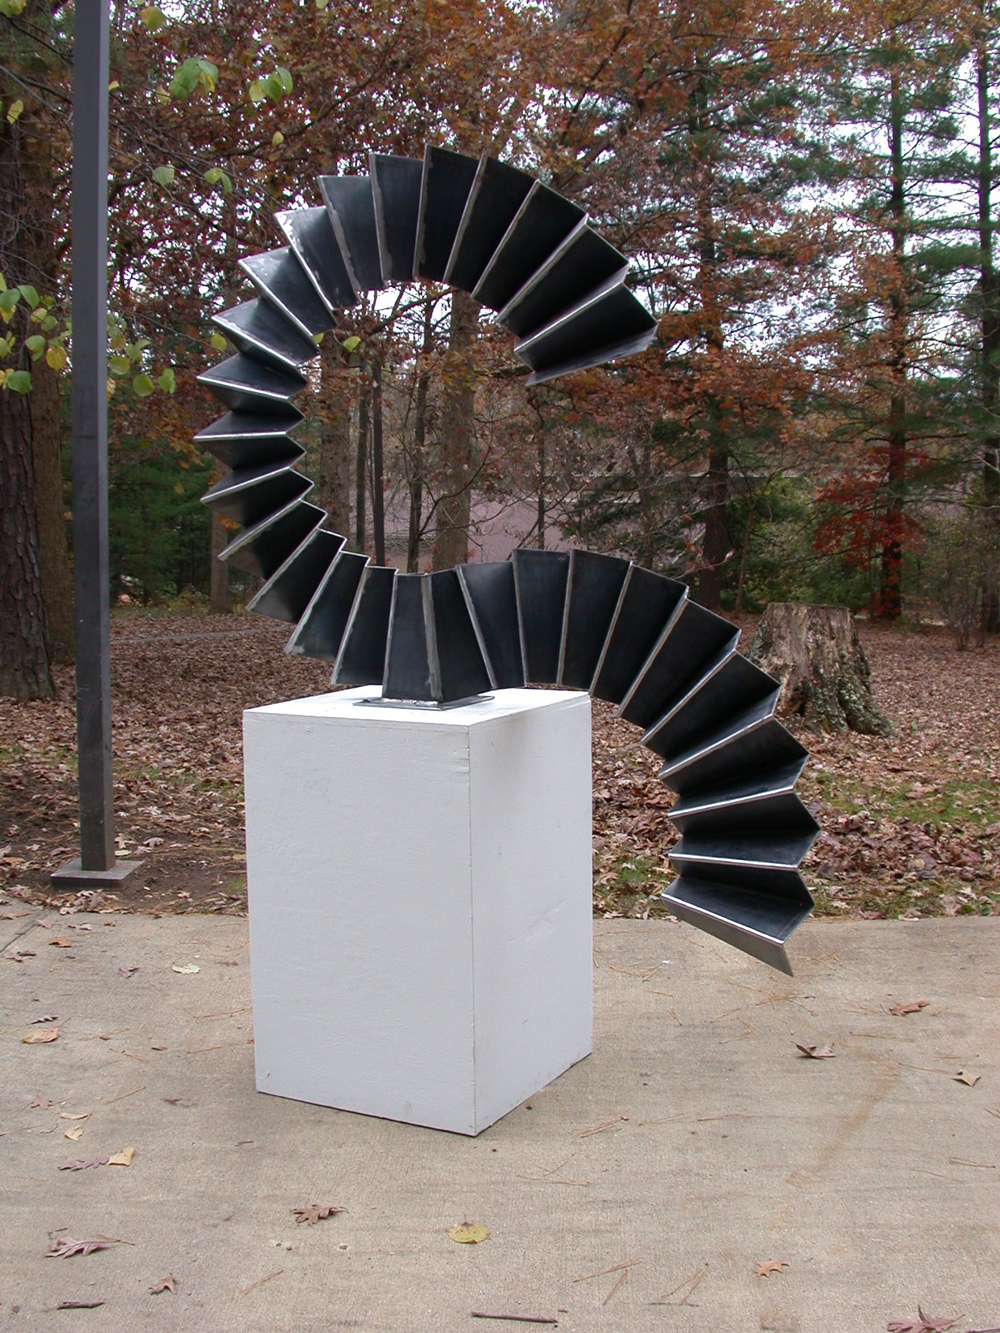 accordion bent steel in s-curve rests on pedestal